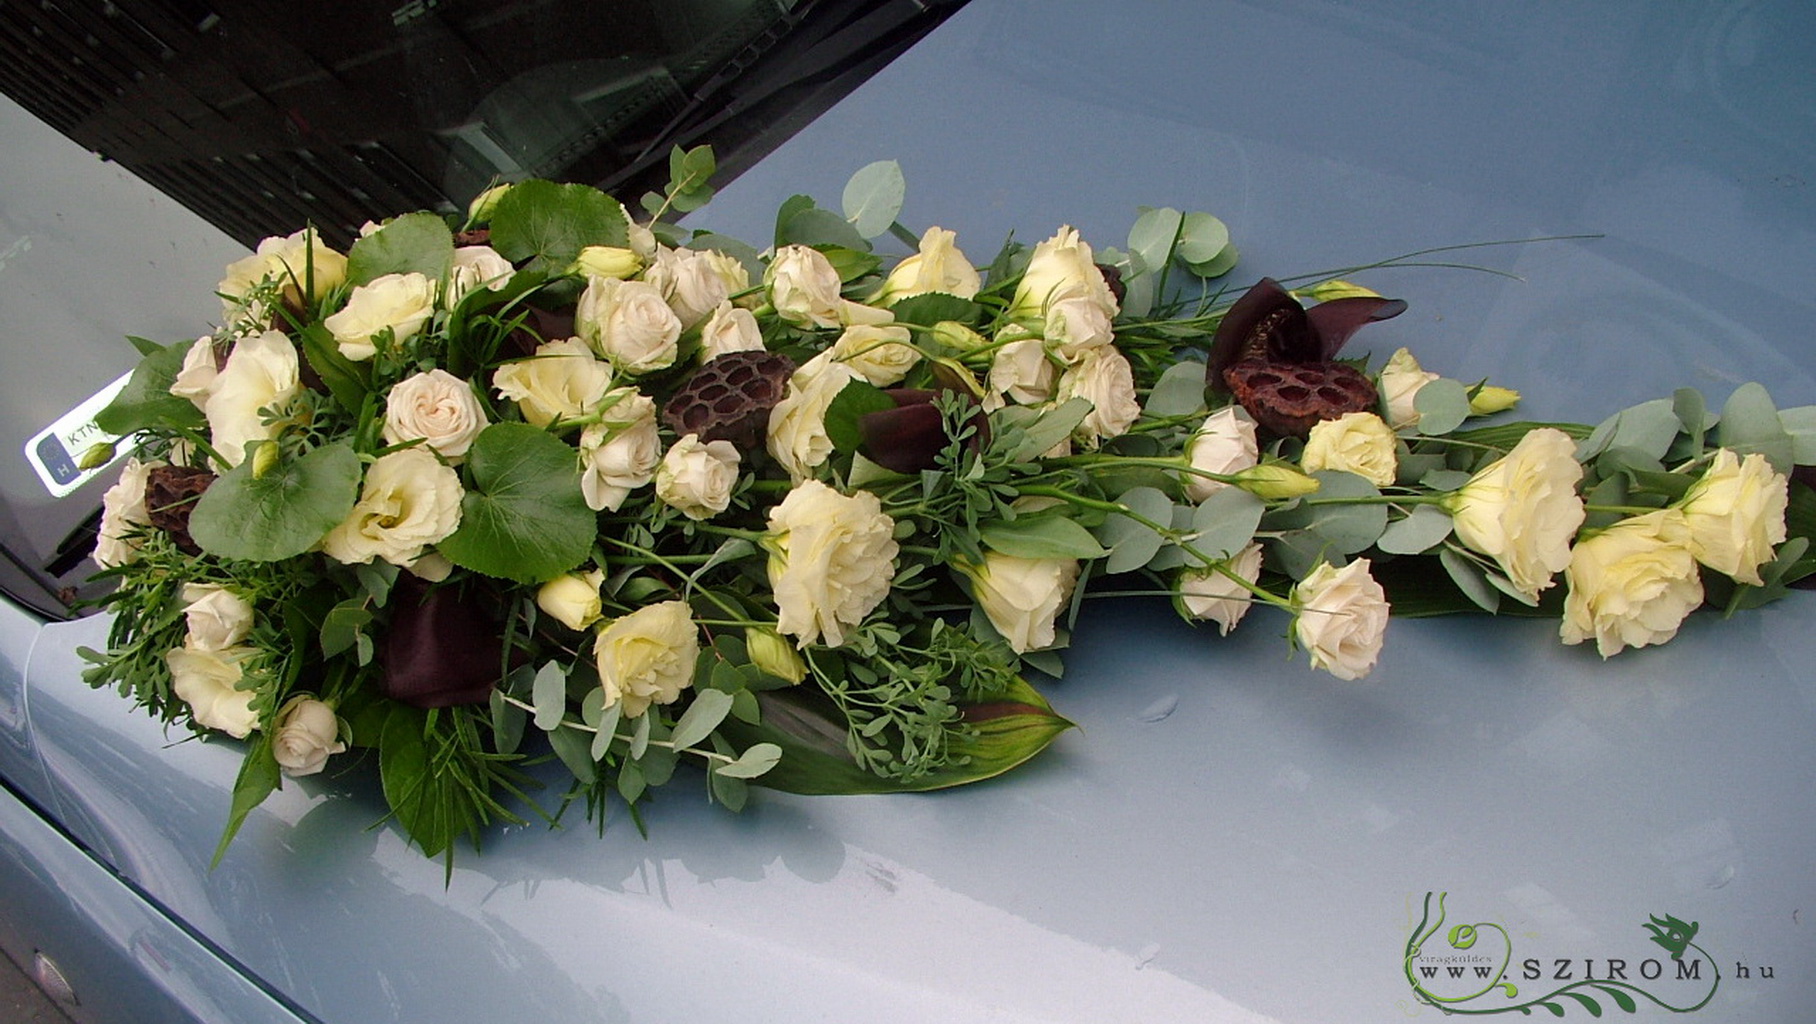 flower delivery Budapest - teardrop car flower arrangement with lisianthus (cream)